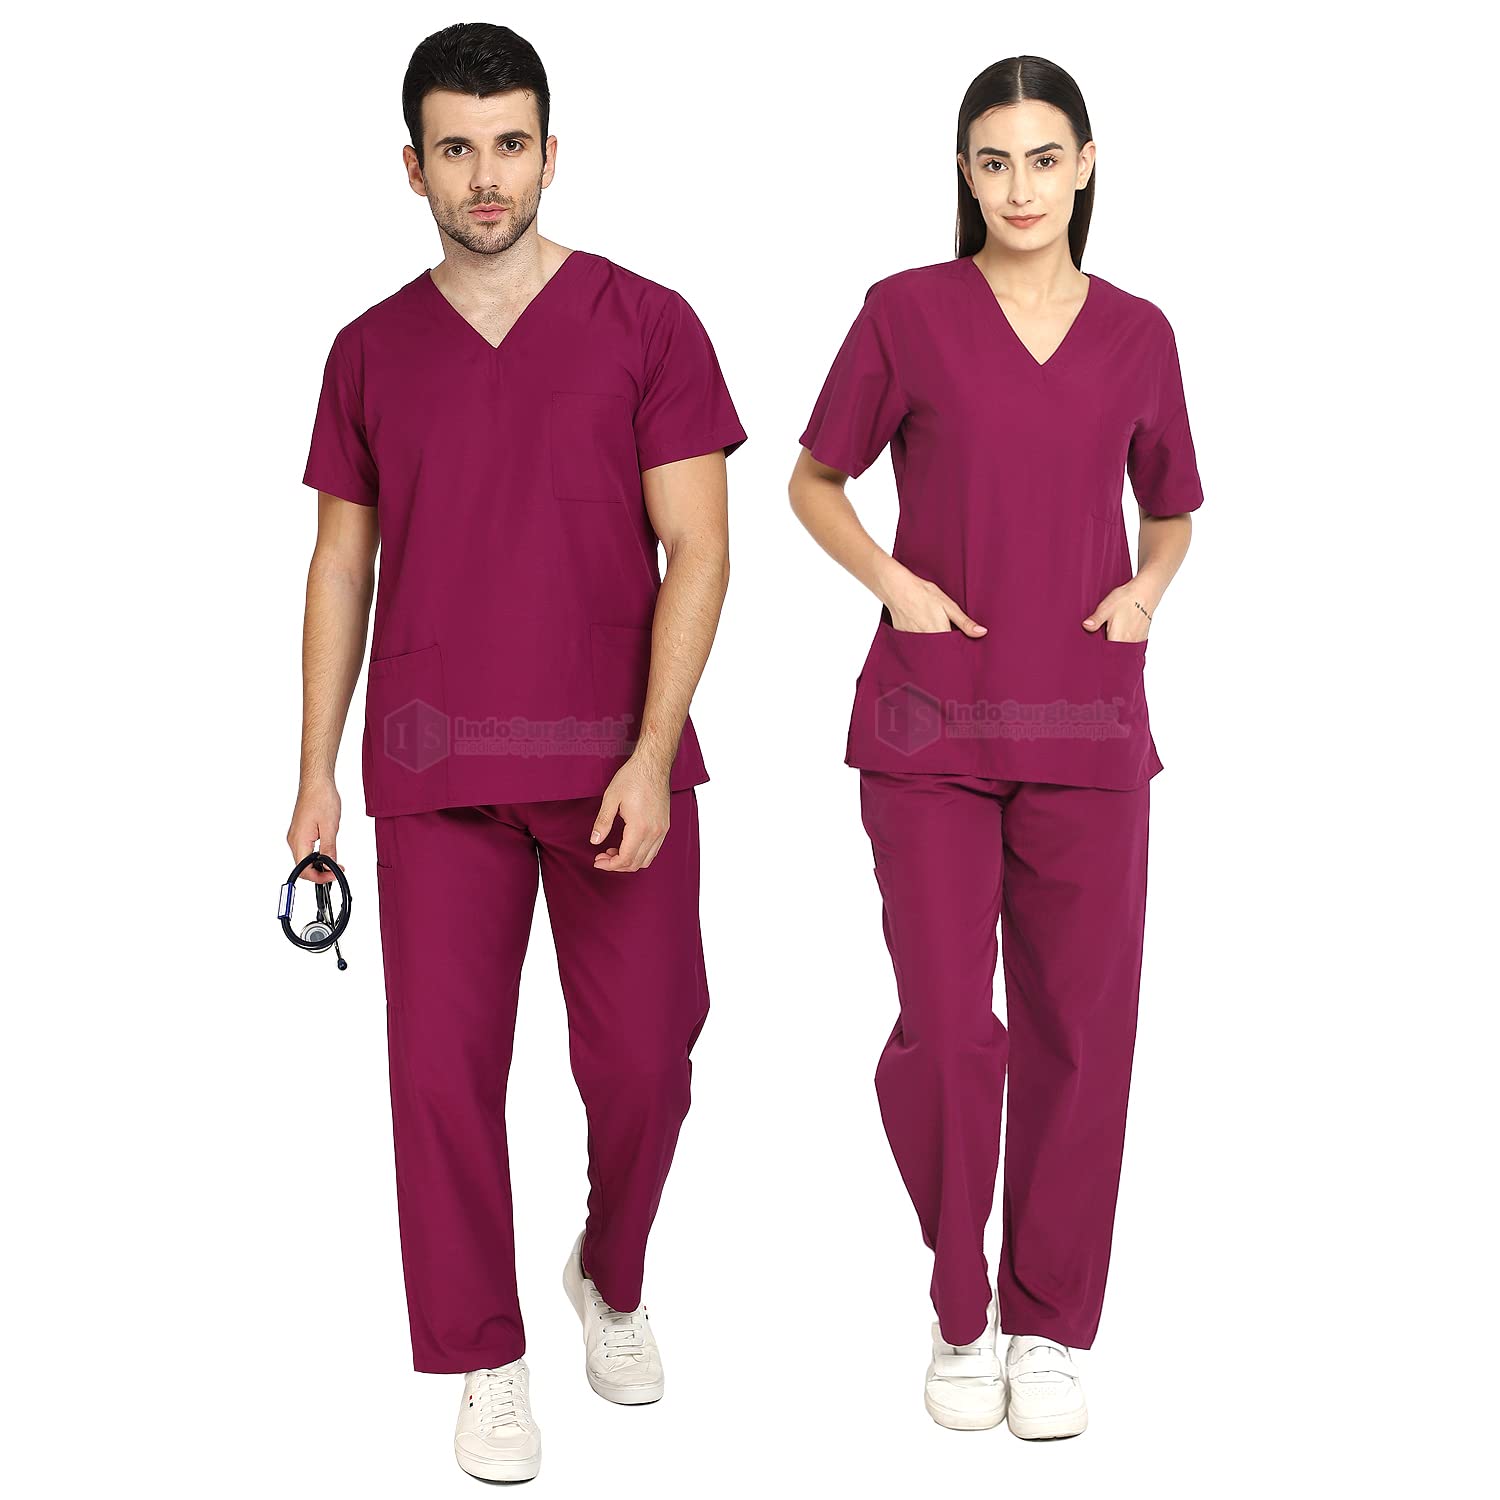 Theatre Suit Scrub Suit for Doctors and Nurses - Medicare